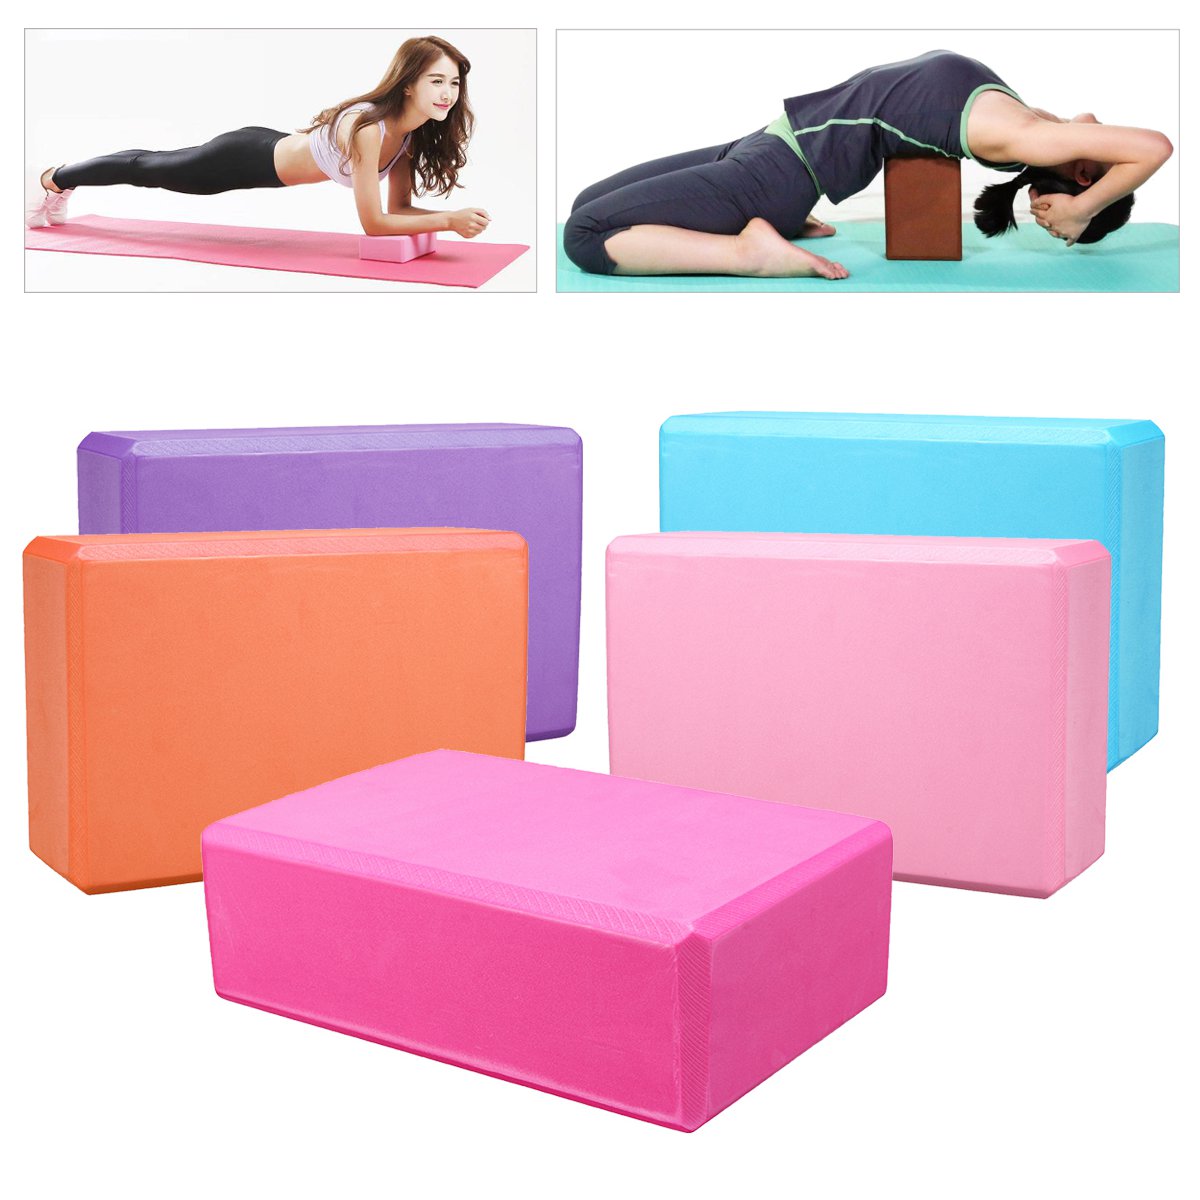 KALOAD-High-Density-EVA-Organic-Yoga-Block-Sports-Fitness-Yoga-Brick-Pilates-Exercise-Tools-1419968